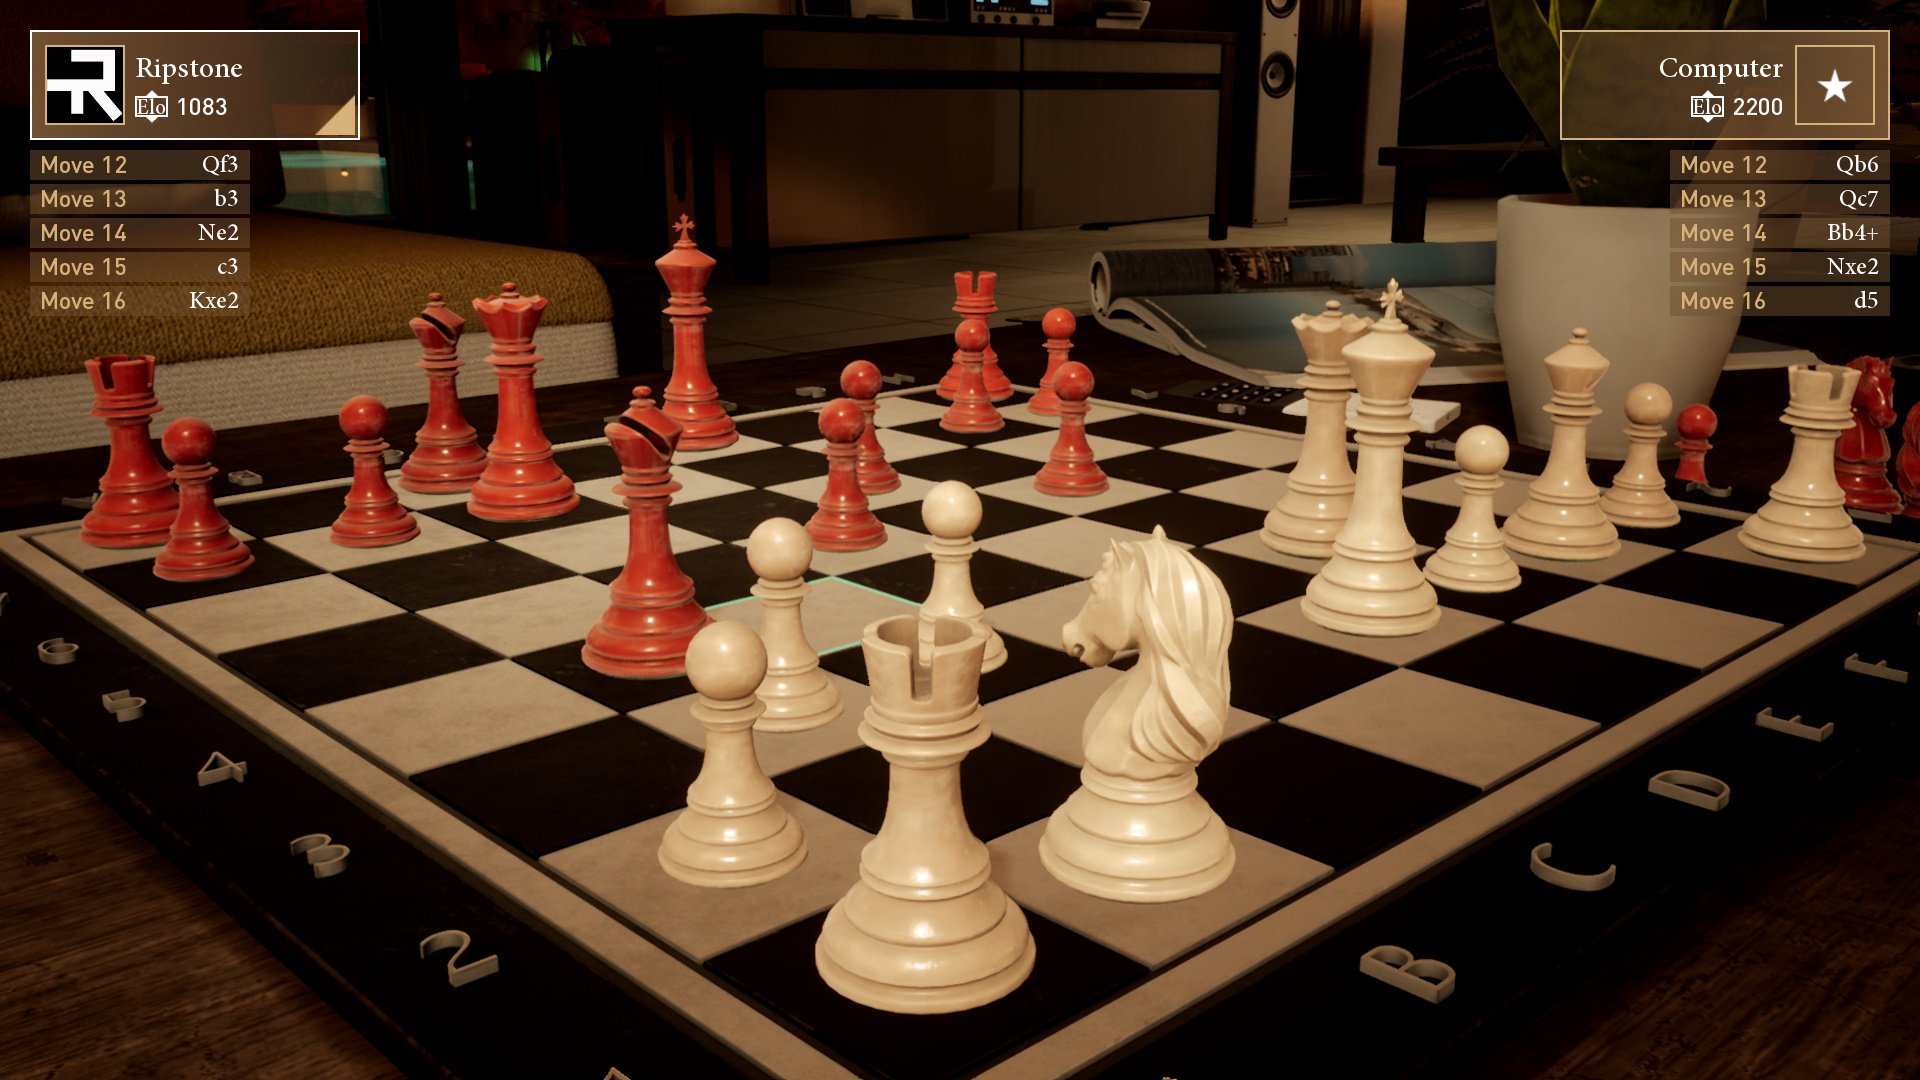 Epic游戏商城3月23日《终极象棋Chess Ultra》免费领取地址